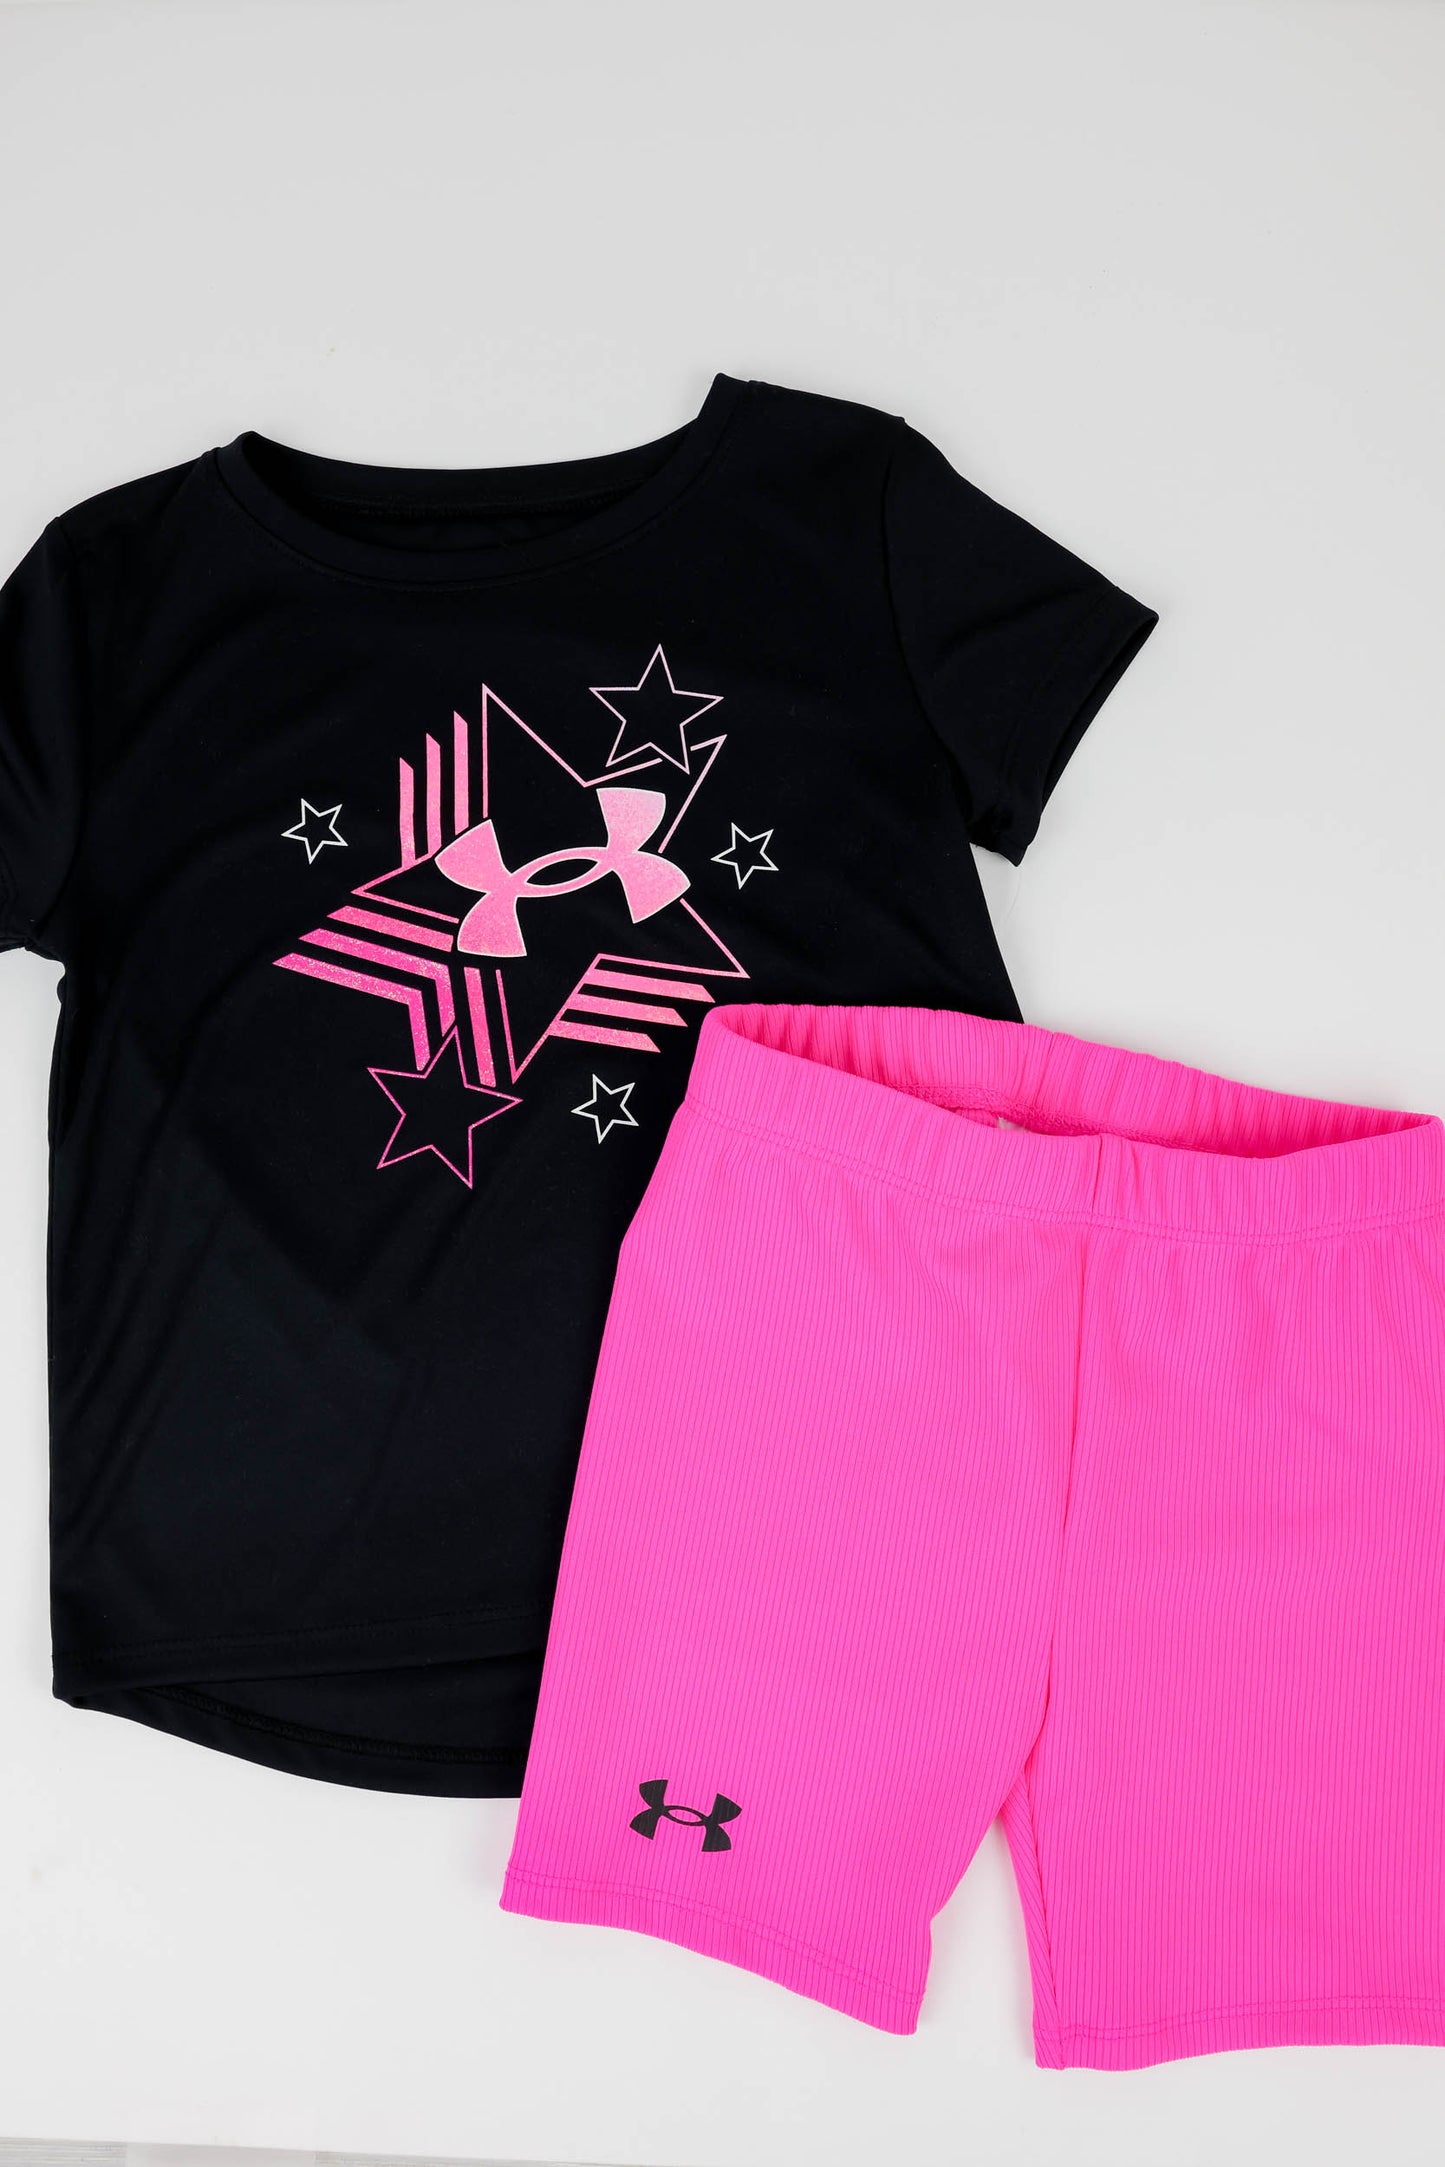  Armour Bike Short, pink - women's shorts - UNDER